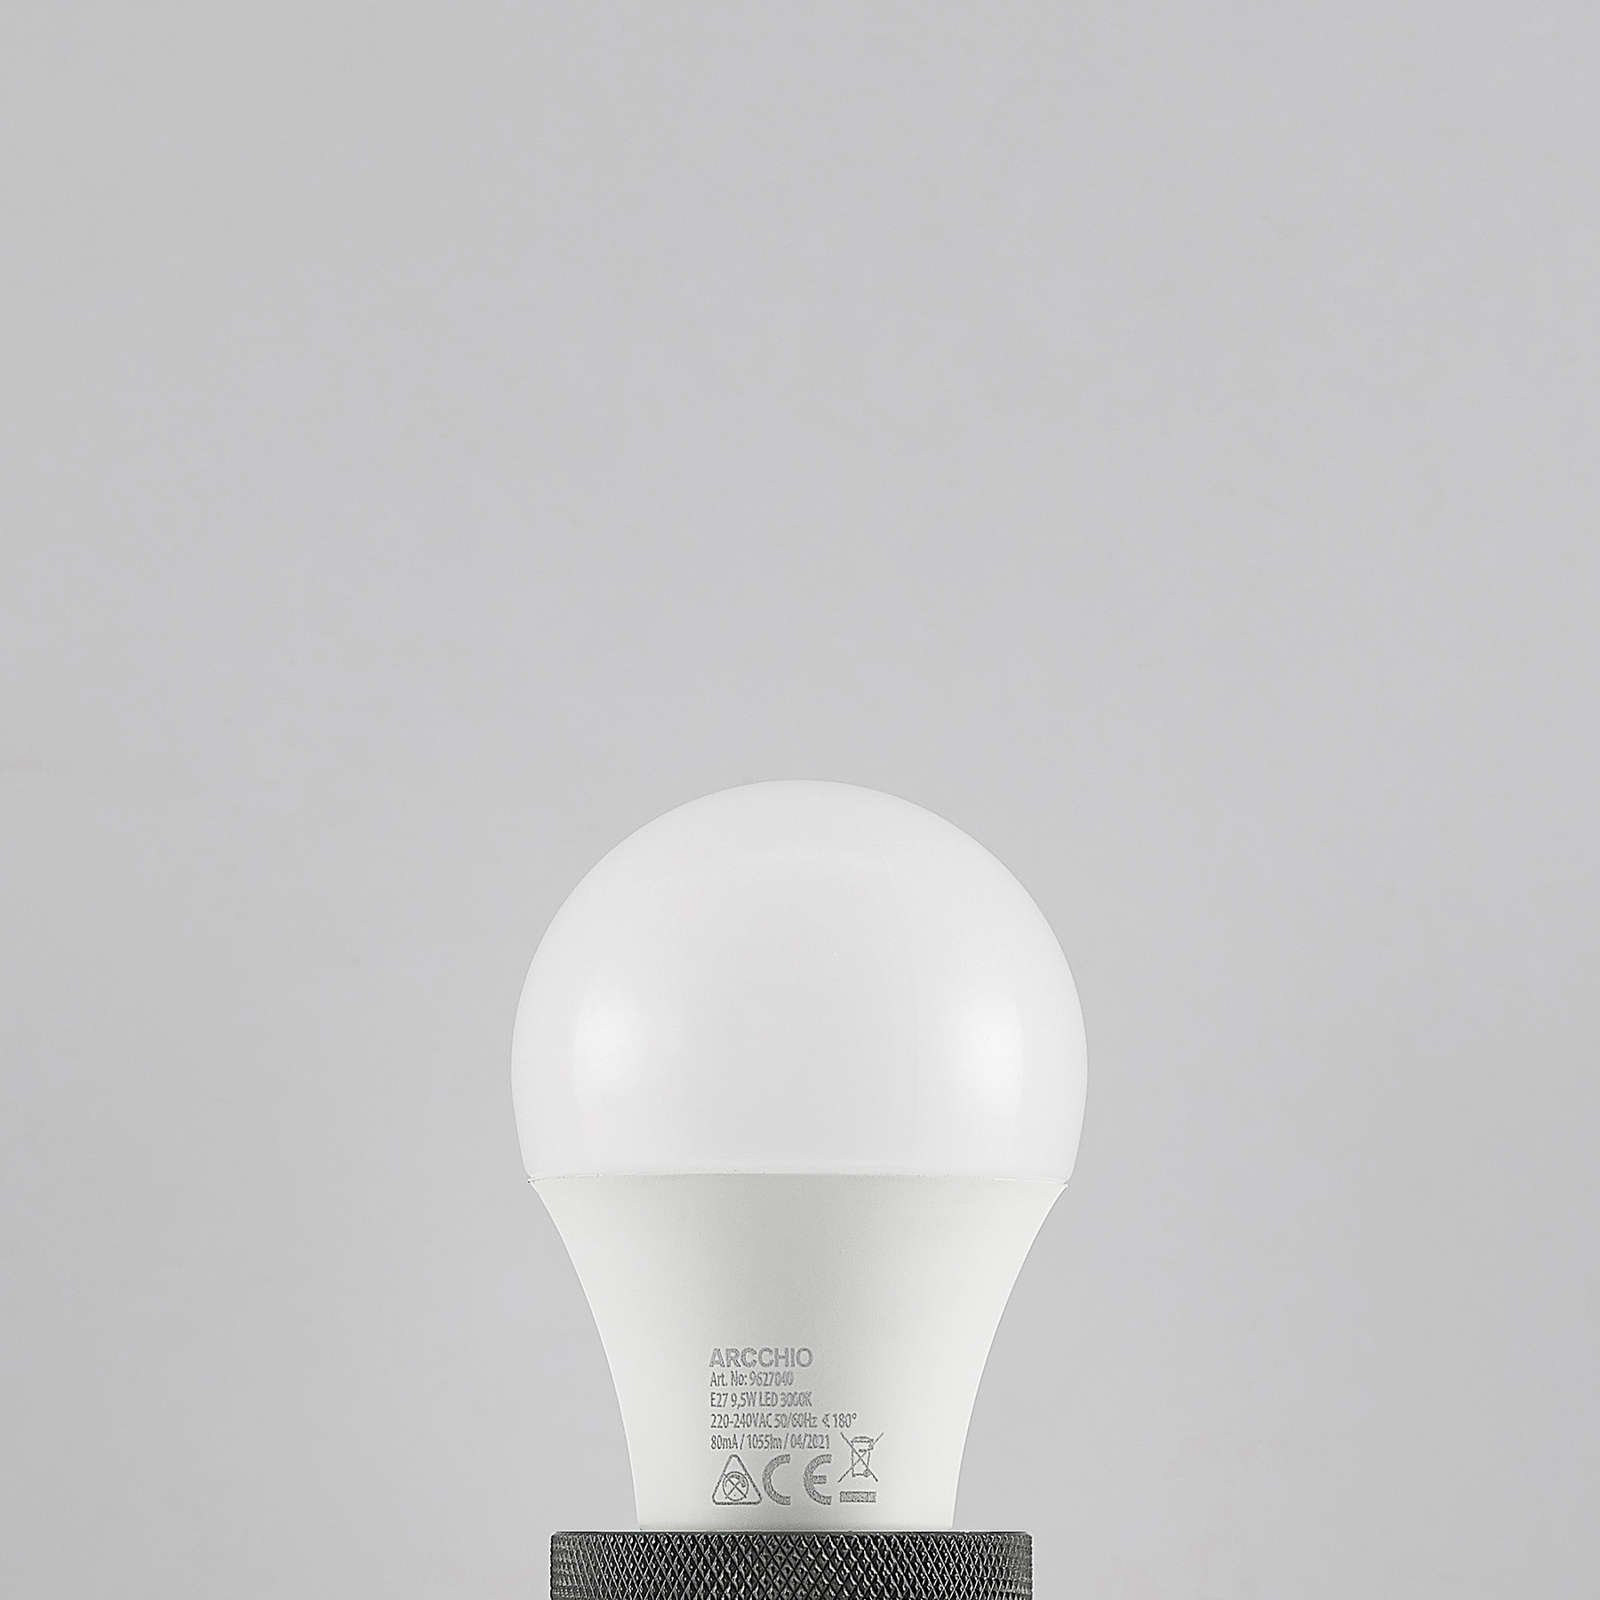 LED bulb E27 A60 9.5 W 3,000 K opal 10-pack